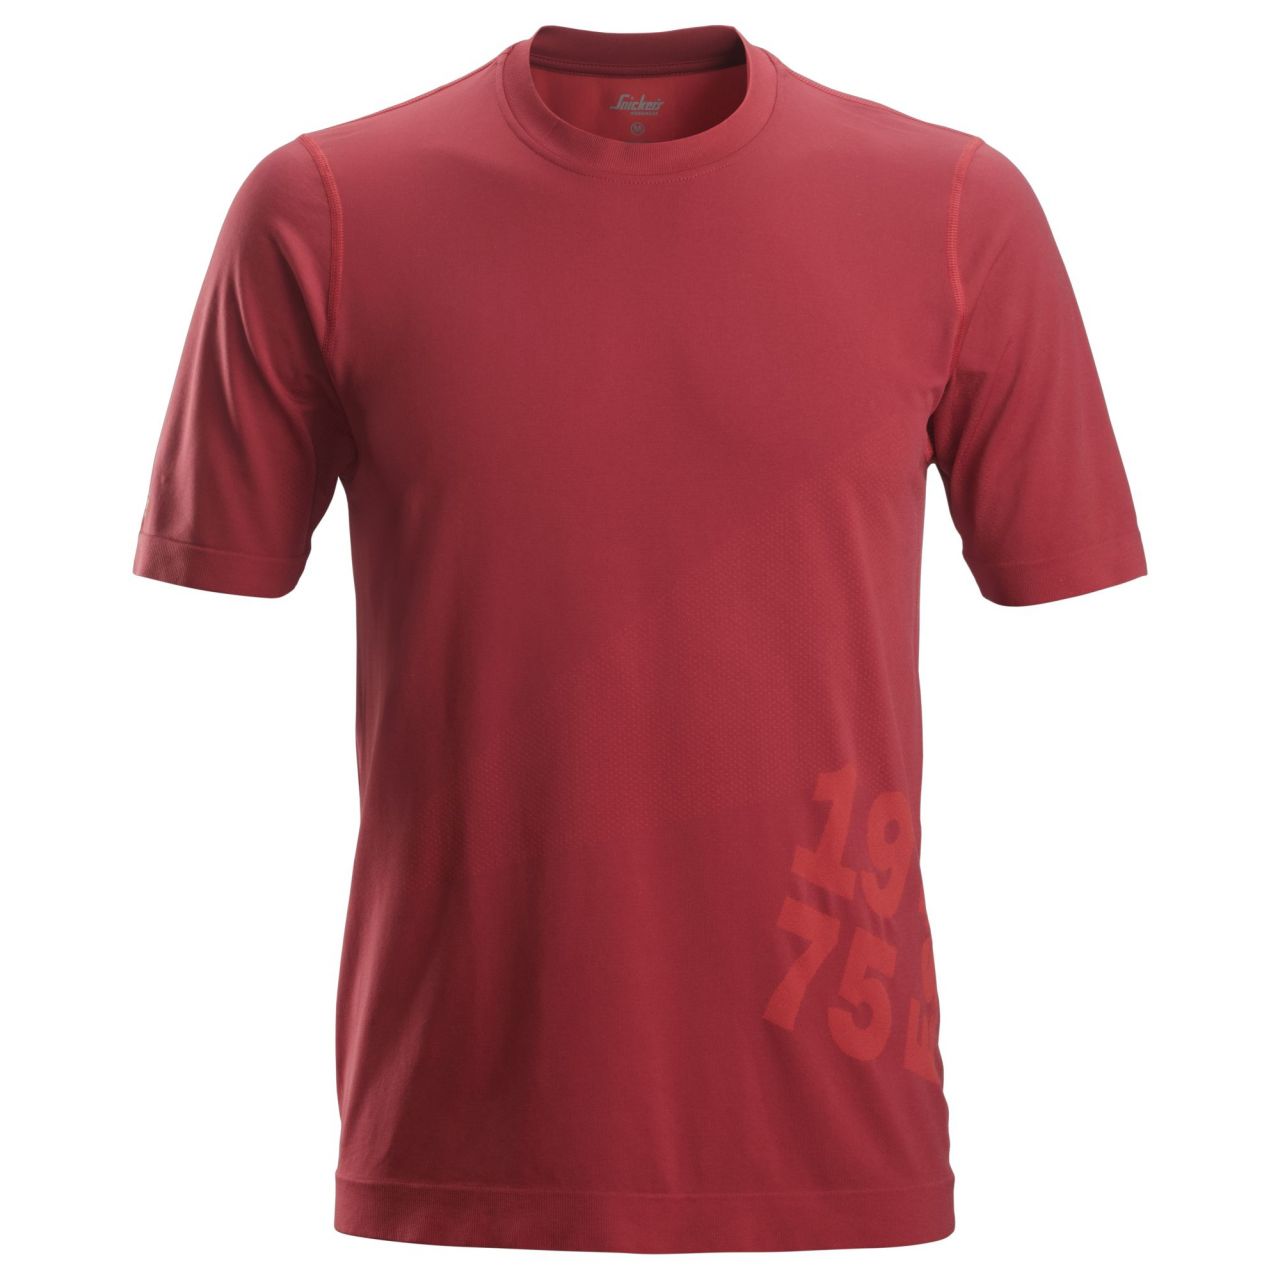 2519 Camiseta FlexiWork 37.5® Tech rojo talla M